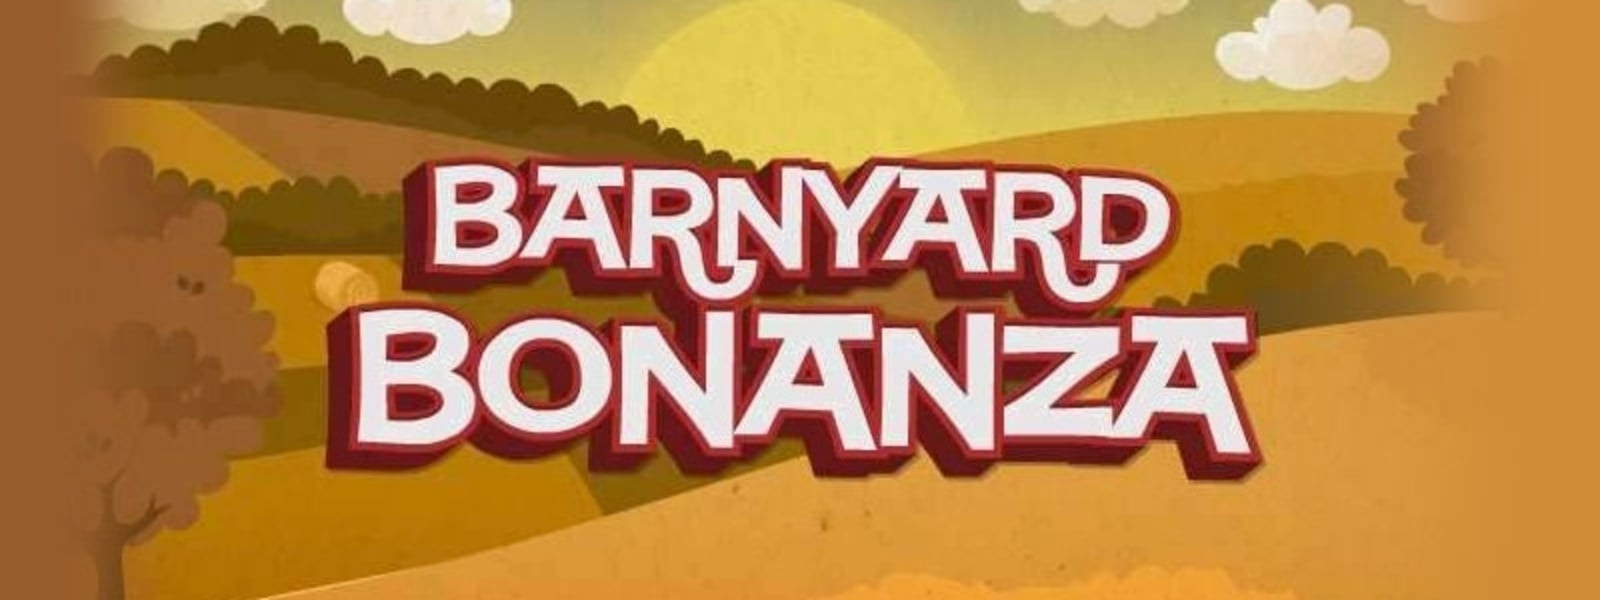 The Barnyard Bonanza Online Slot Demo Game by Gamesys